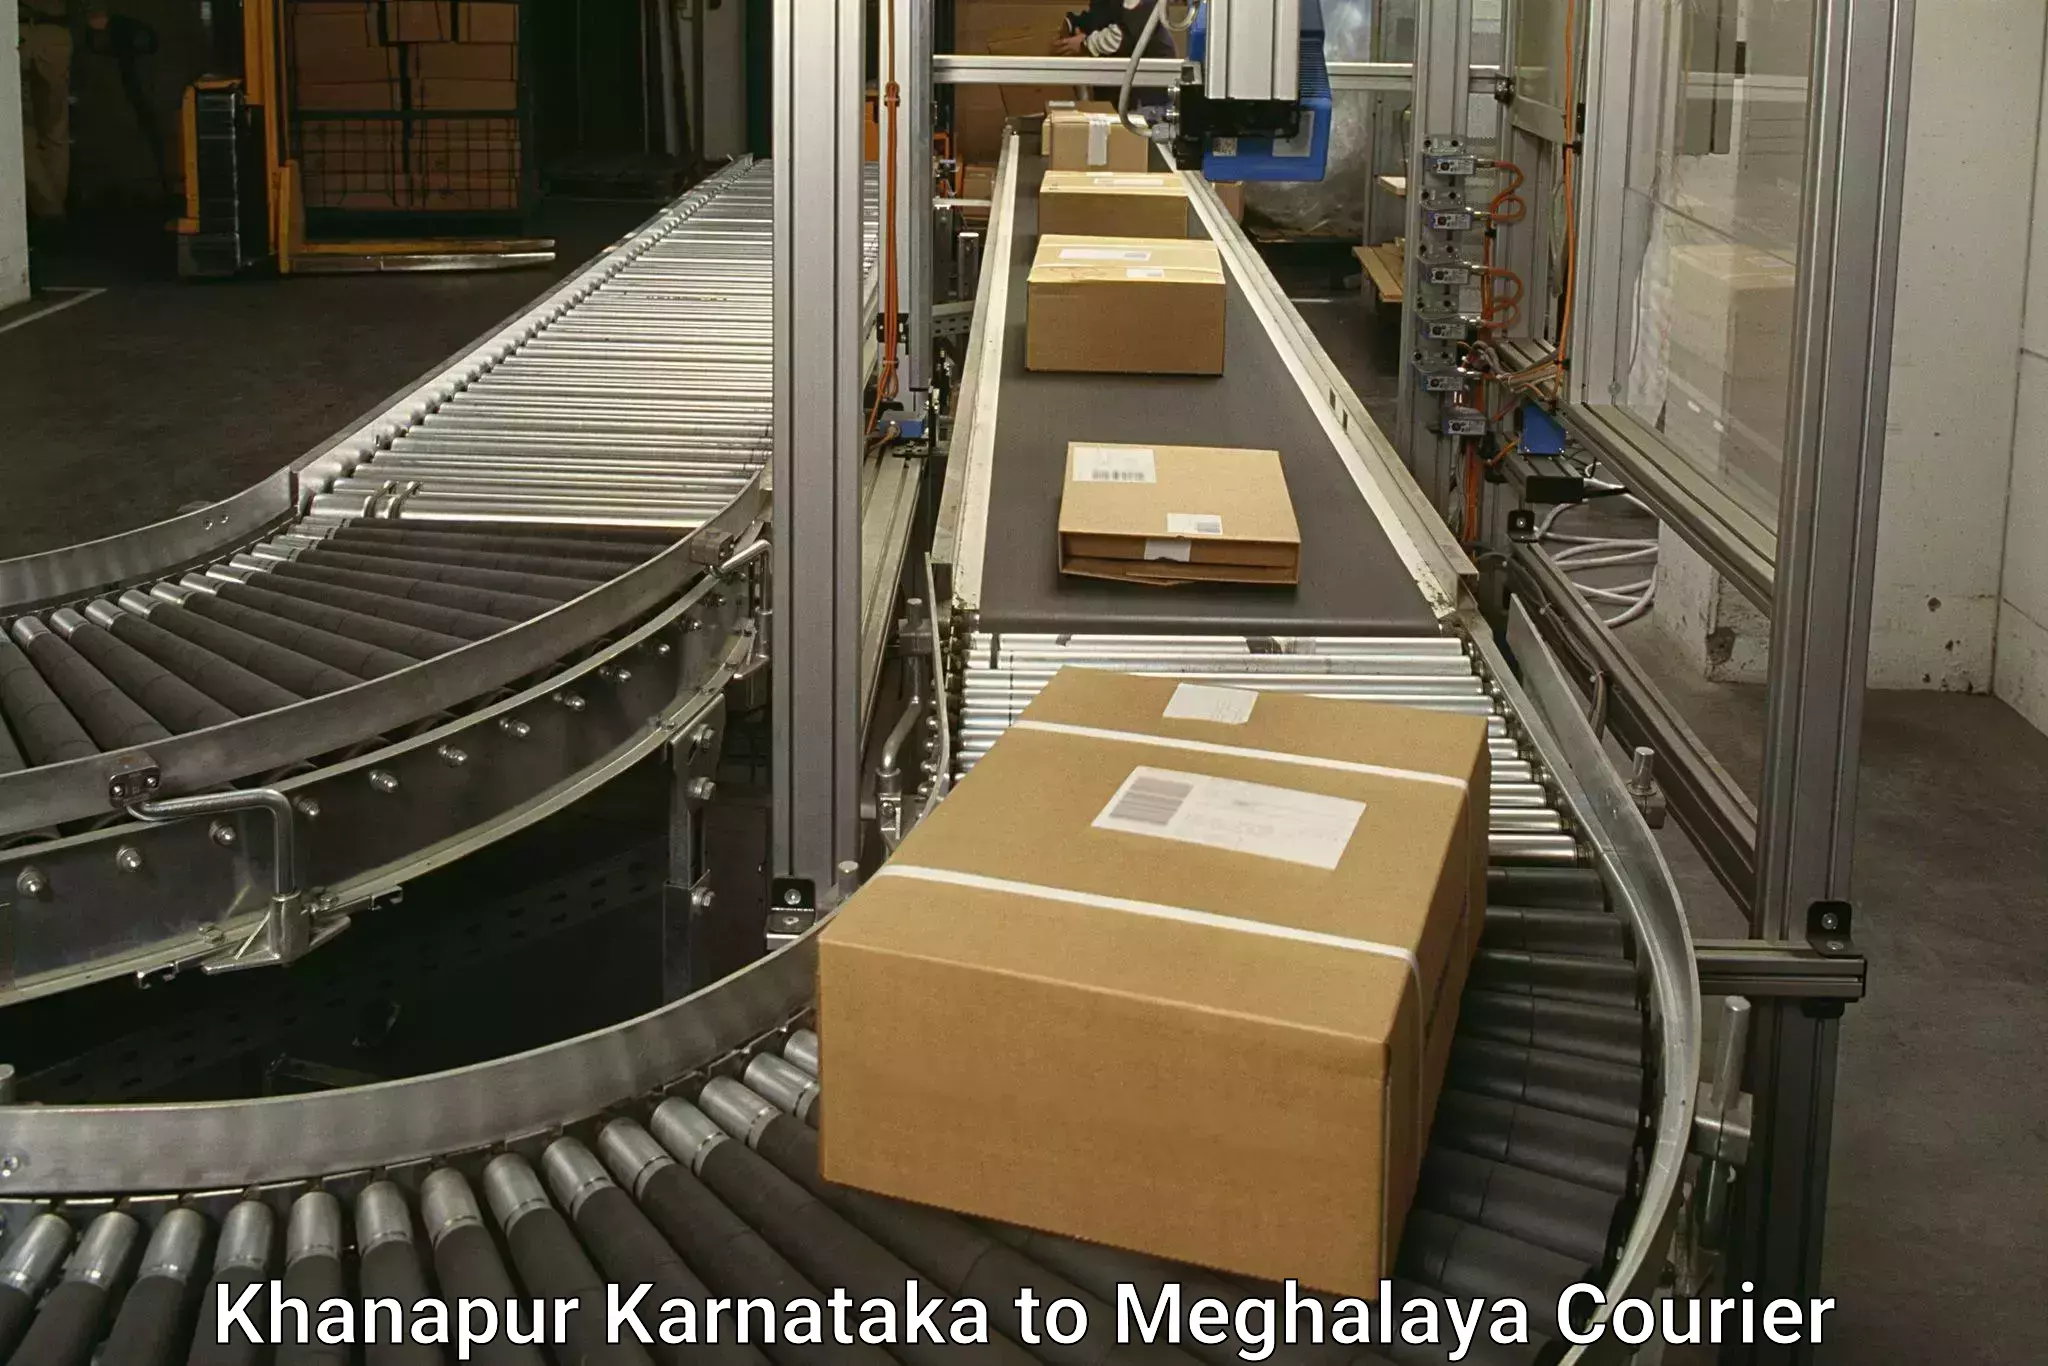 Cash on delivery service Khanapur Karnataka to Nongpoh